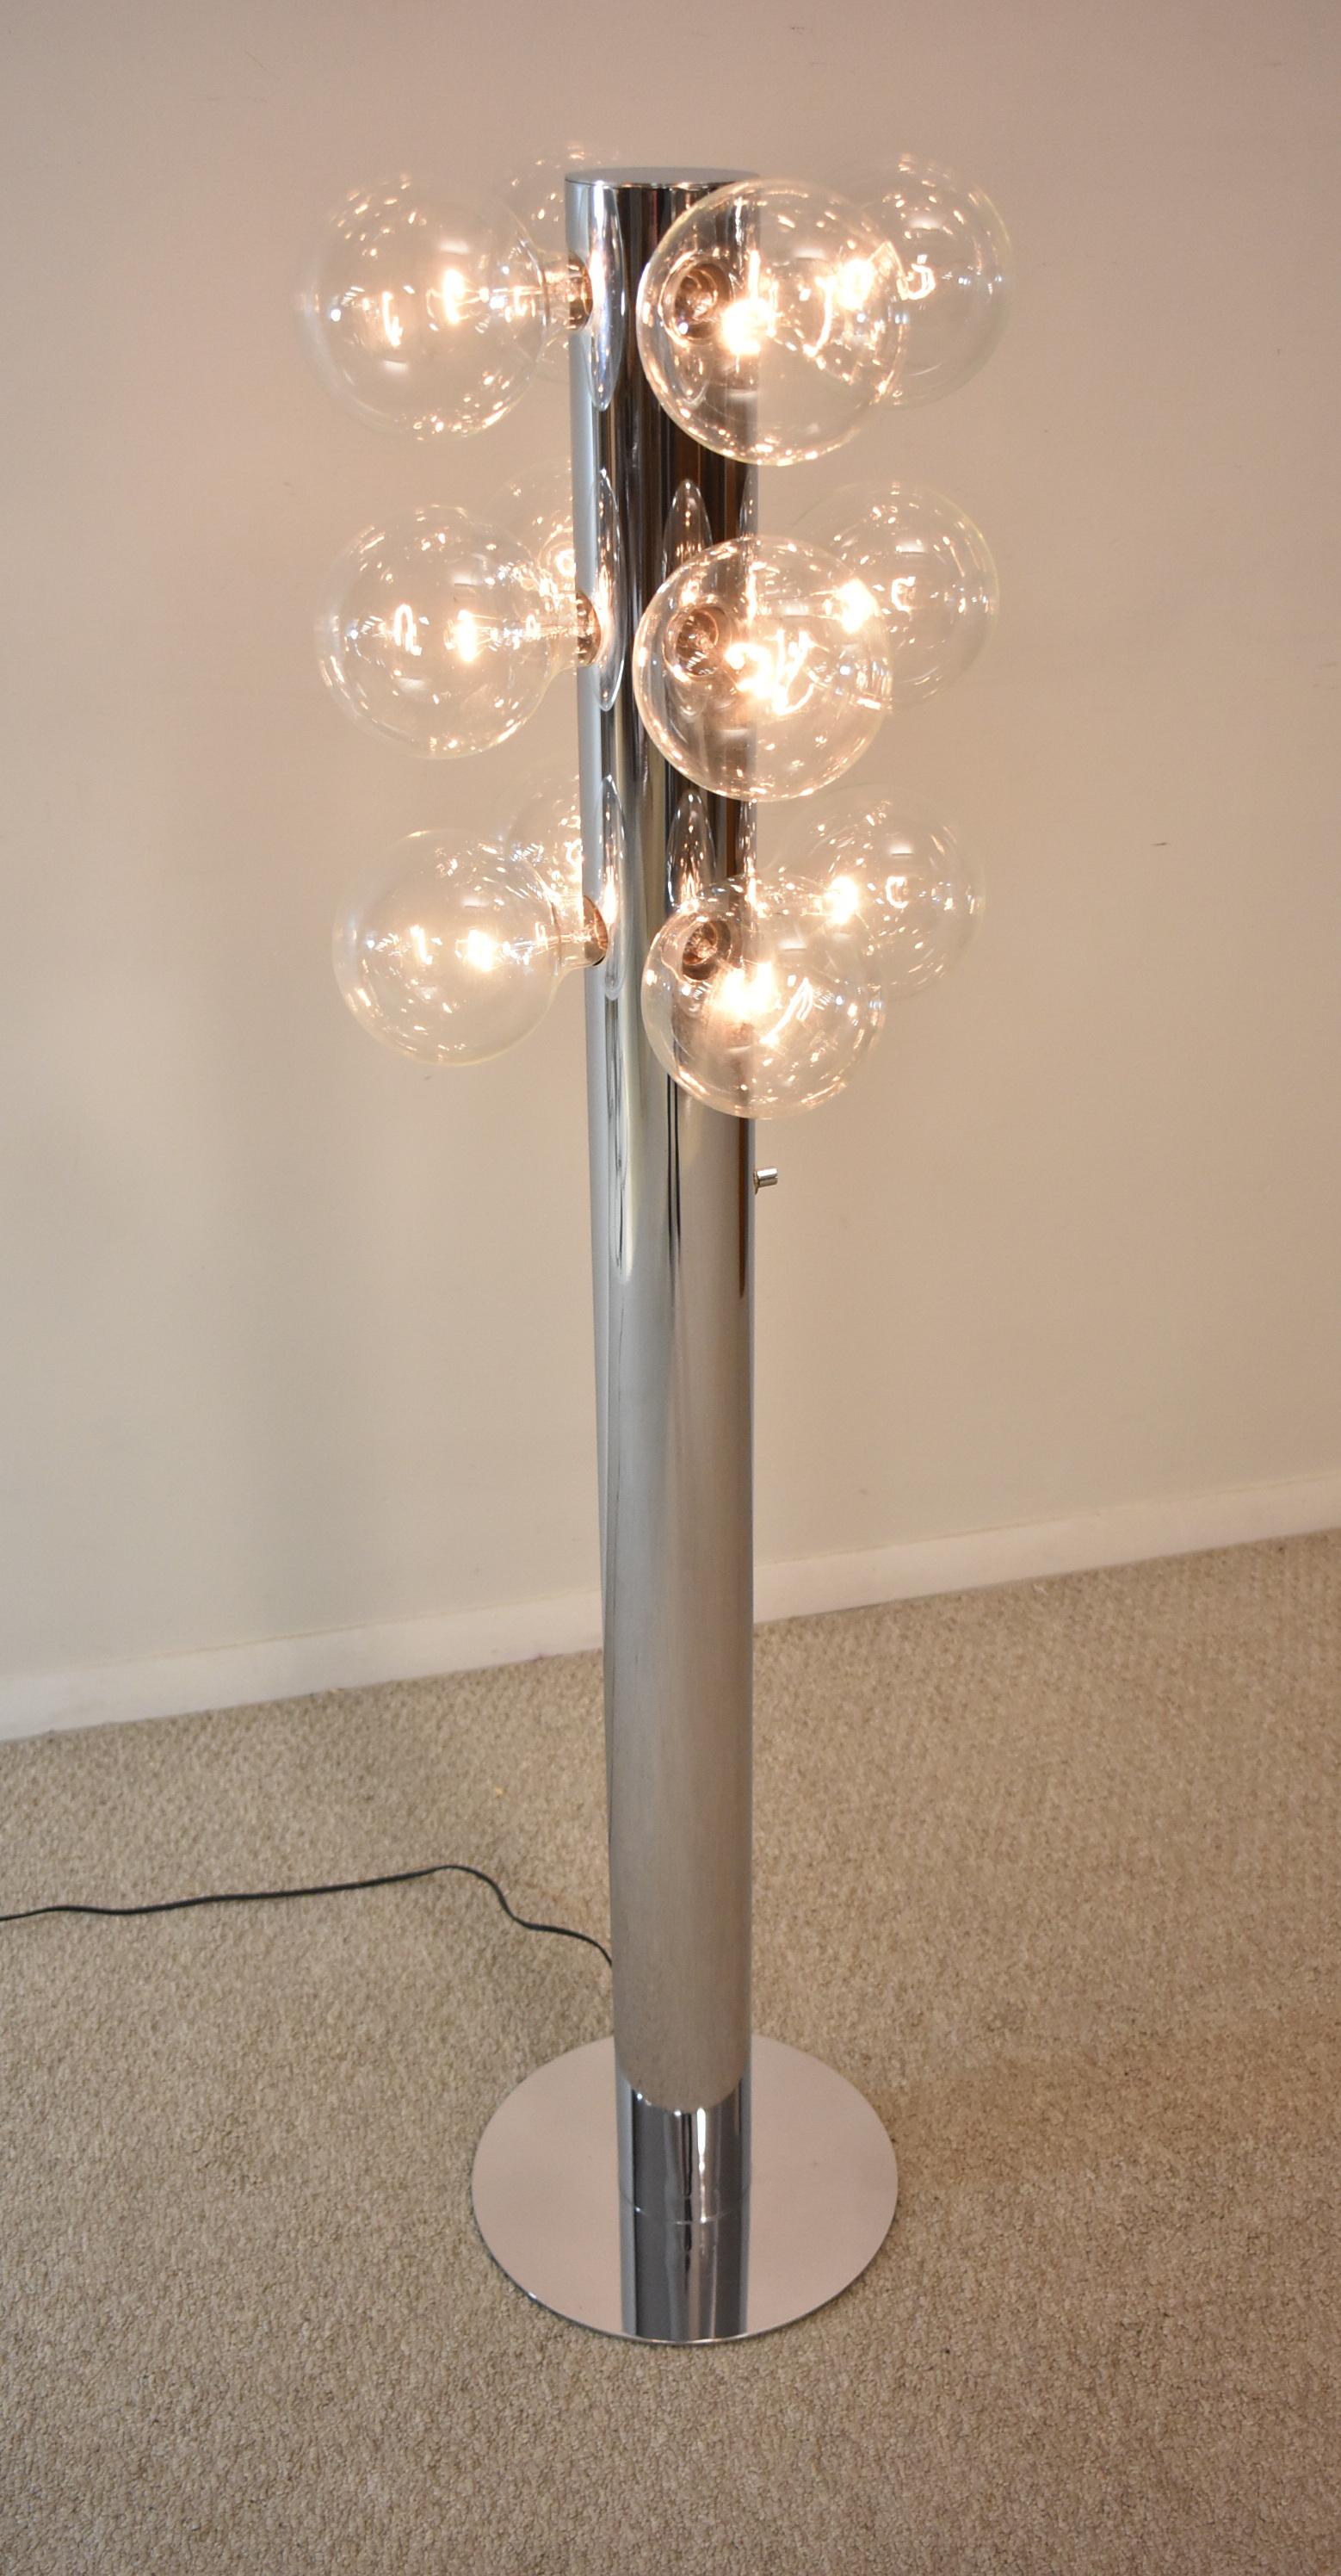 Chrome modern floor lamp in the style of Sonneman Lighting with 4